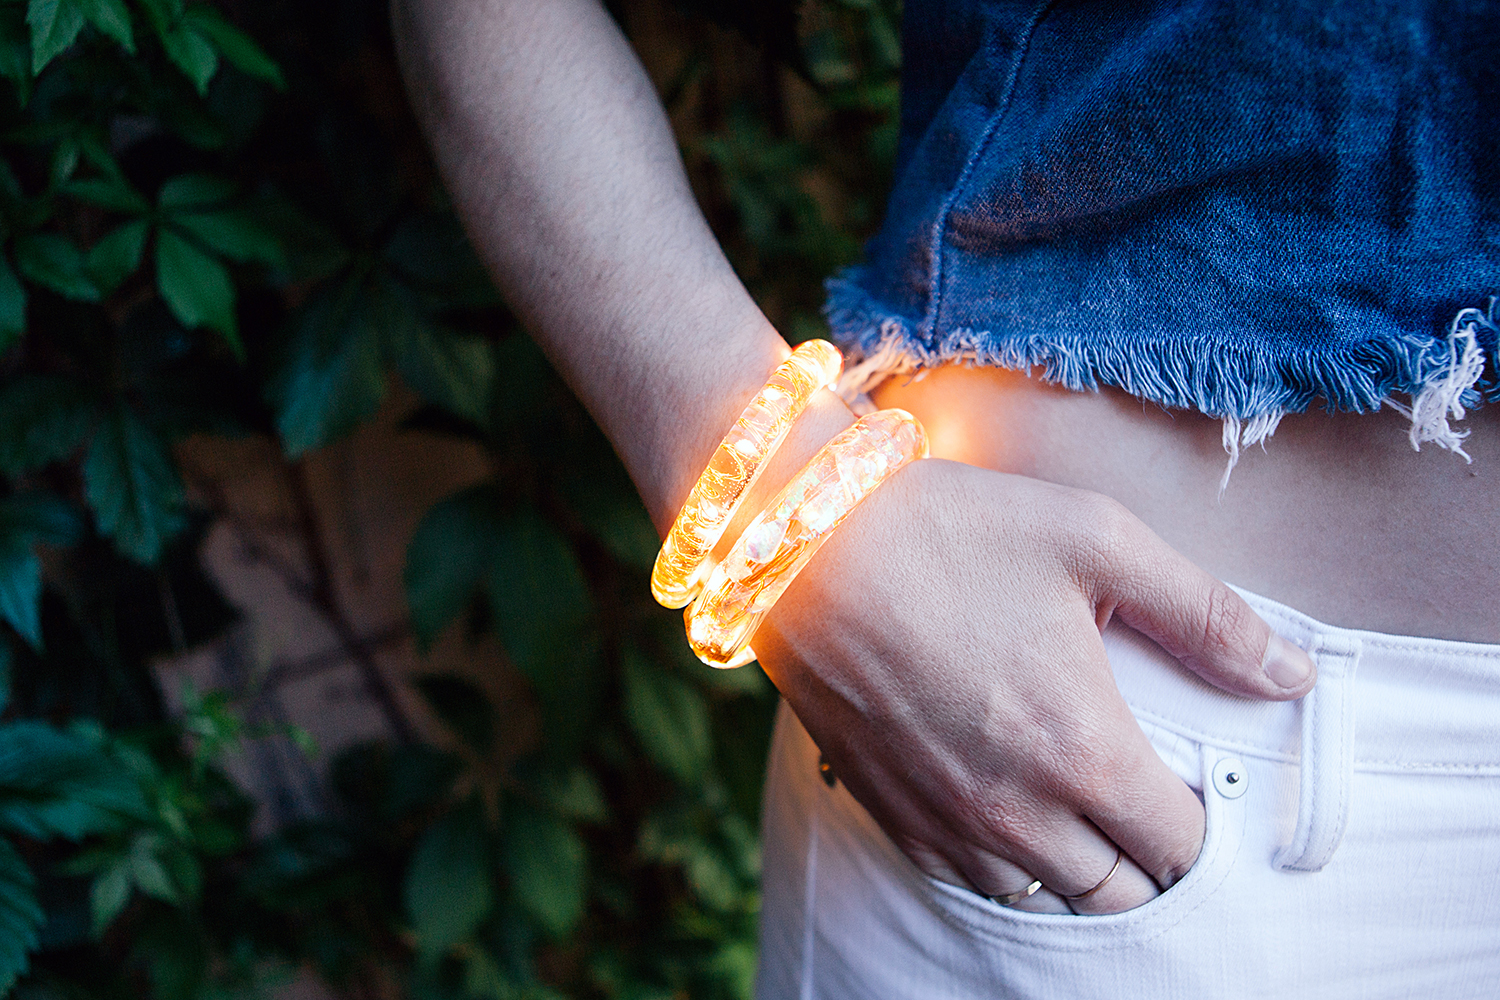 Hardware Hump Day: DIY Firefly LED Bracelet - News - SparkFun